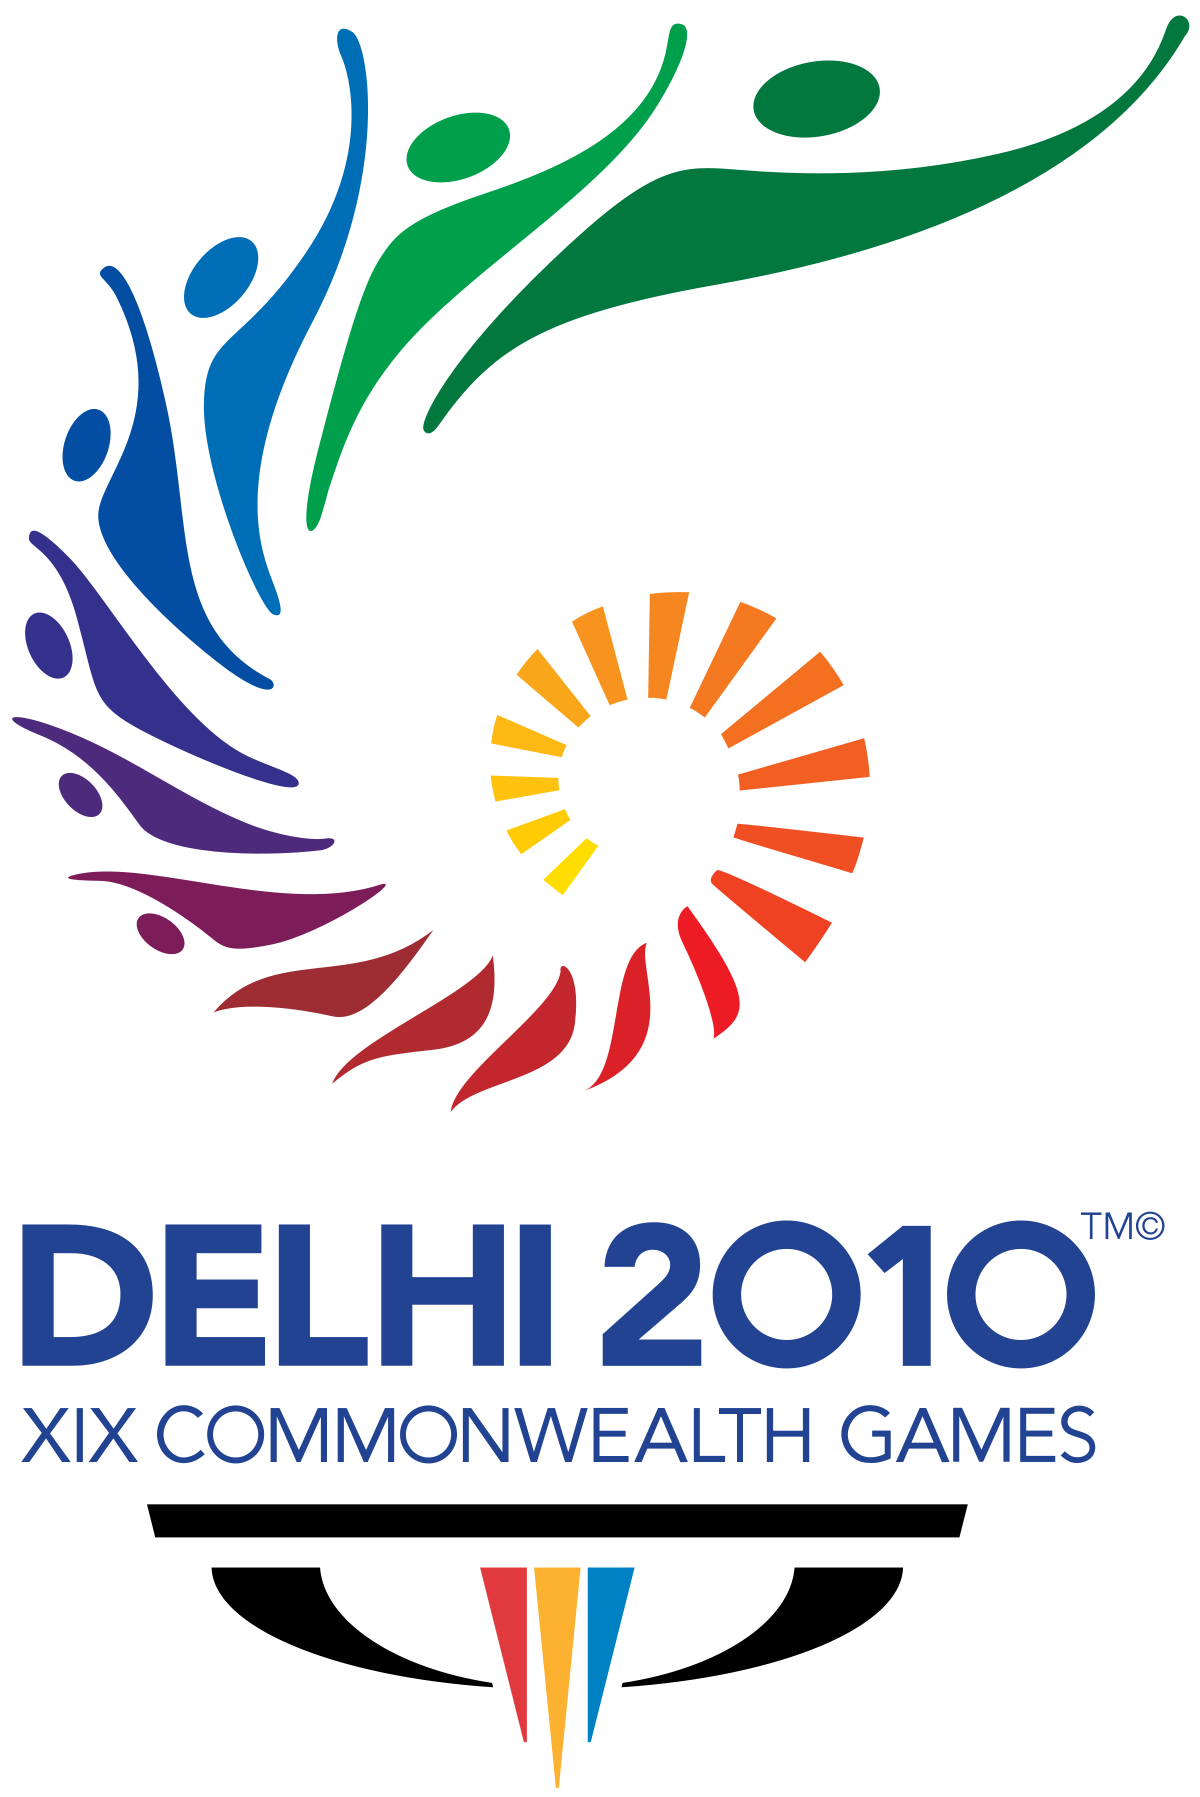 2010 Commonwealth Games - Wikipedia